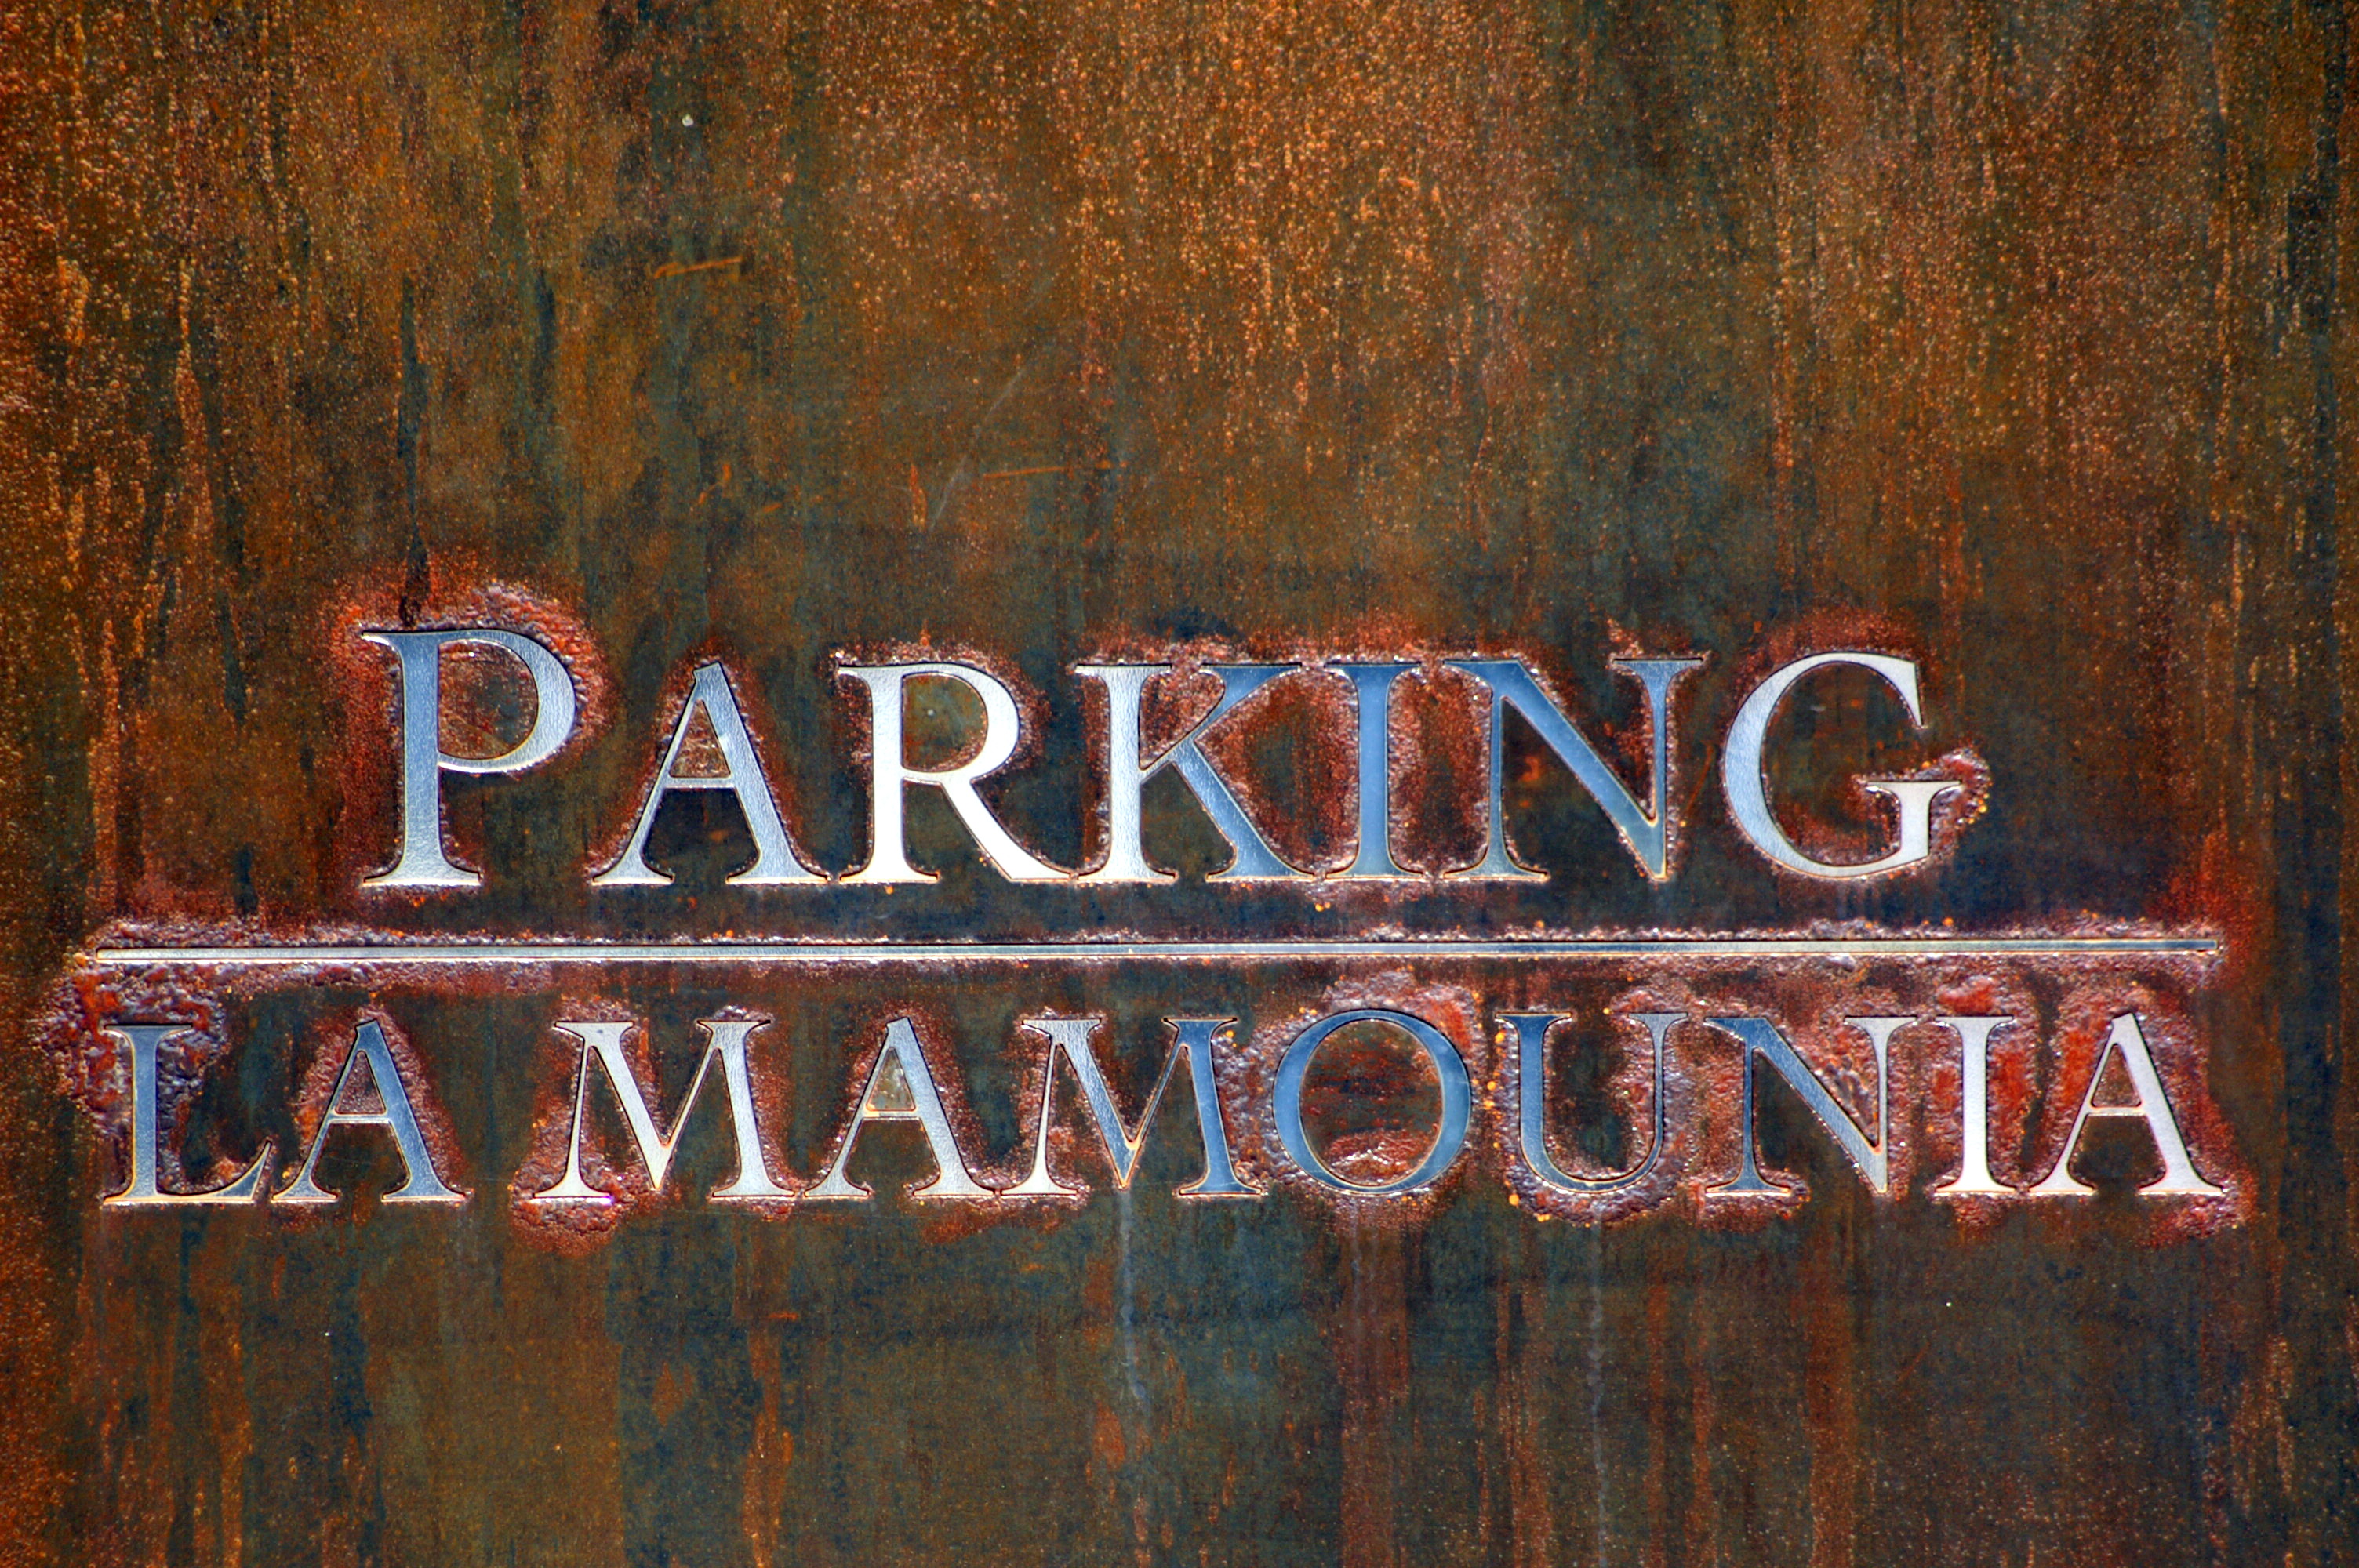 Parking lot sign at La Mamounia, Marrakech, Morocco